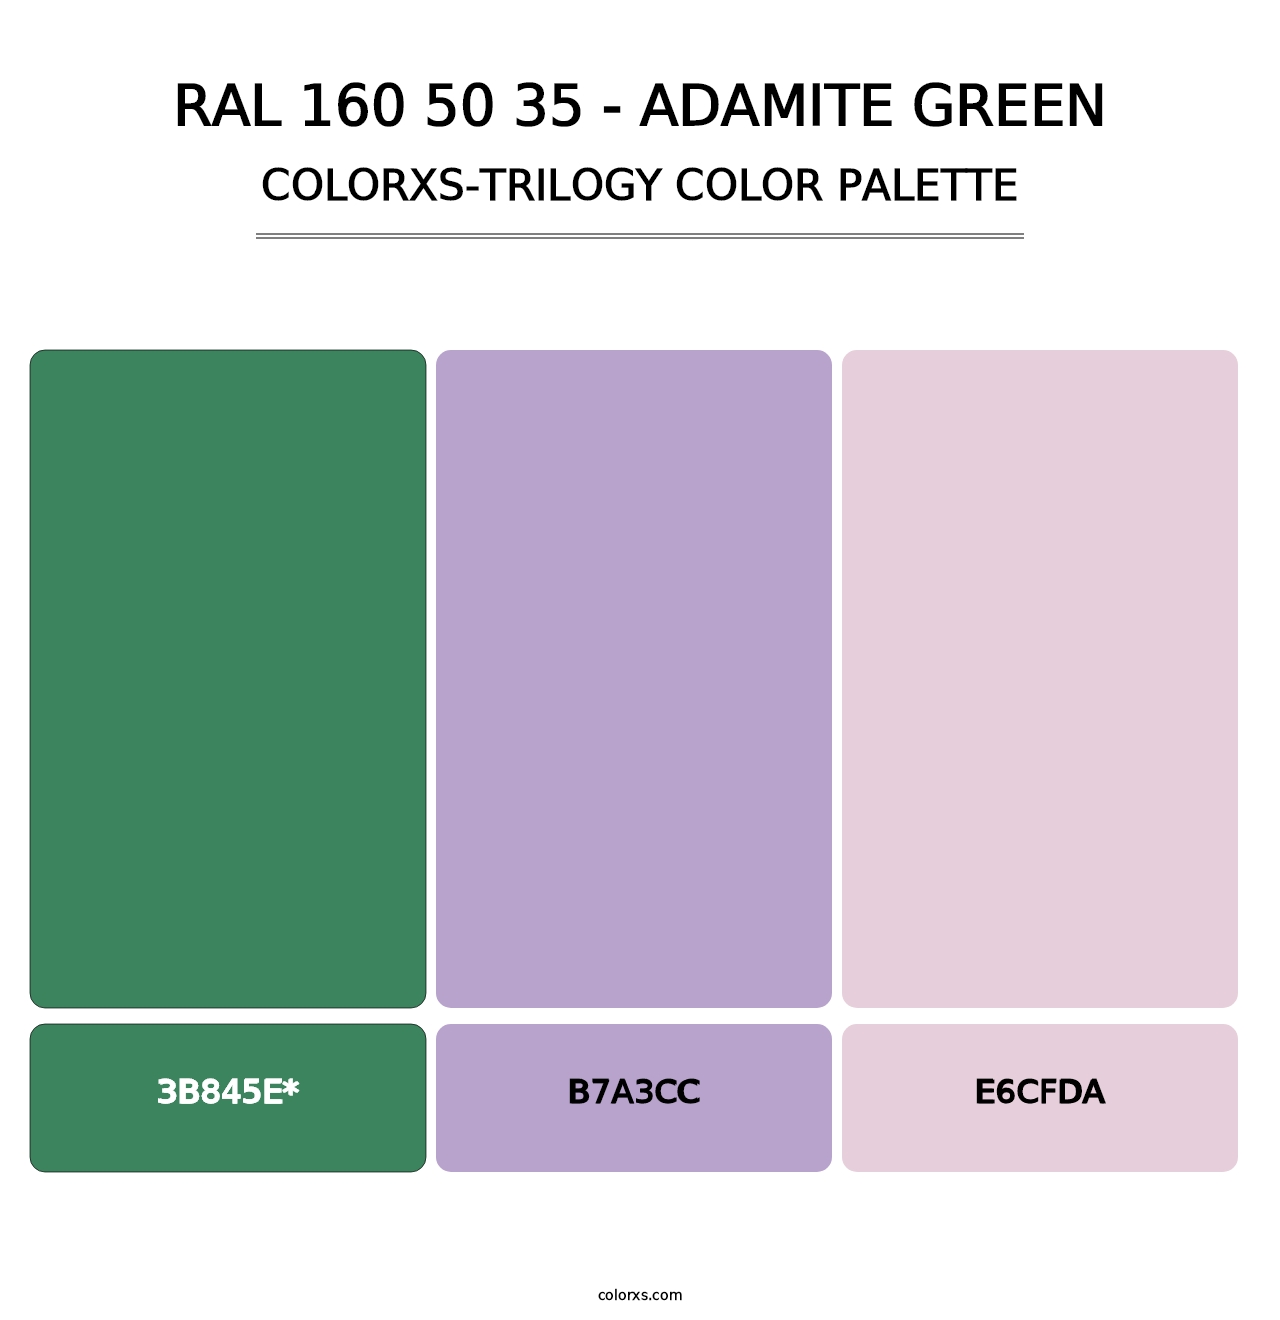 RAL 160 50 35 - Adamite Green - Colorxs Trilogy Palette